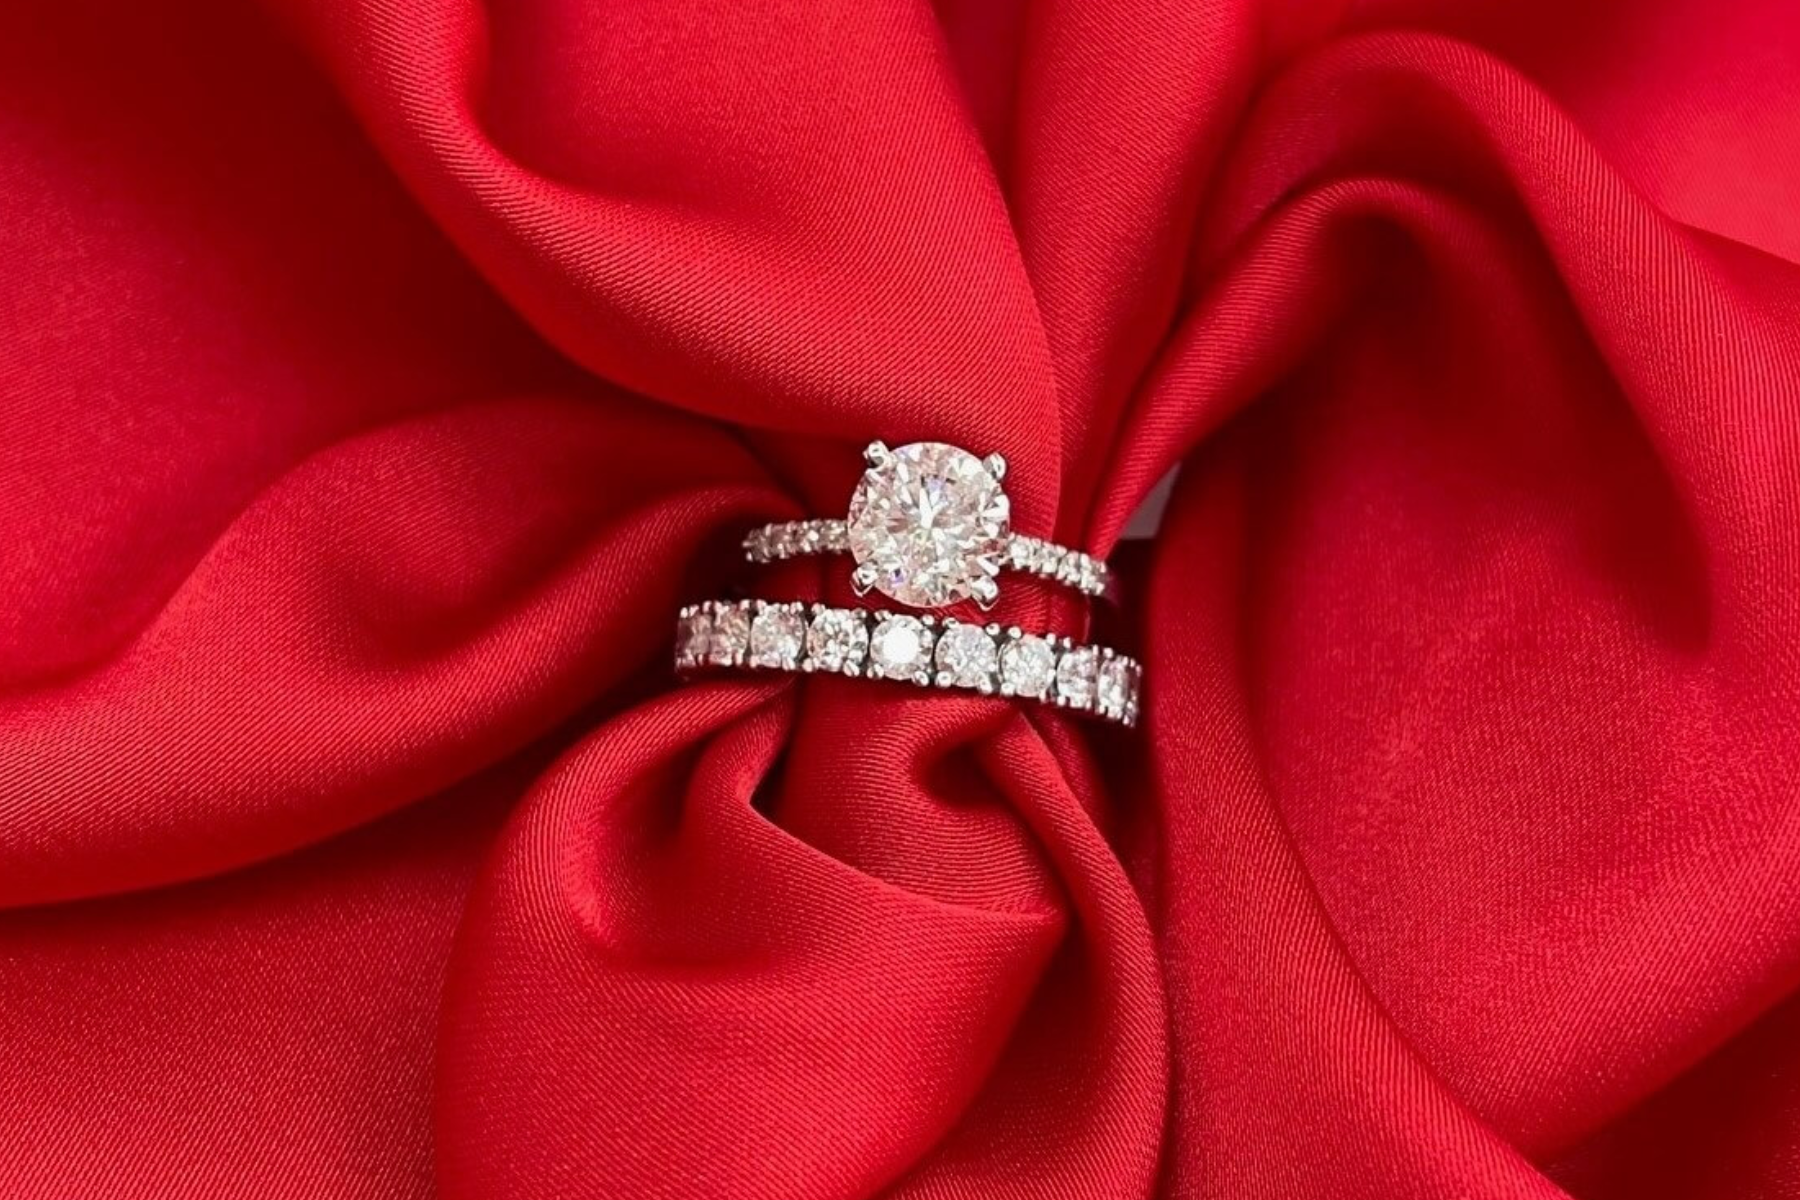 Diamond Jewelry For Valentine's Day - Stunning Diamond Pieces